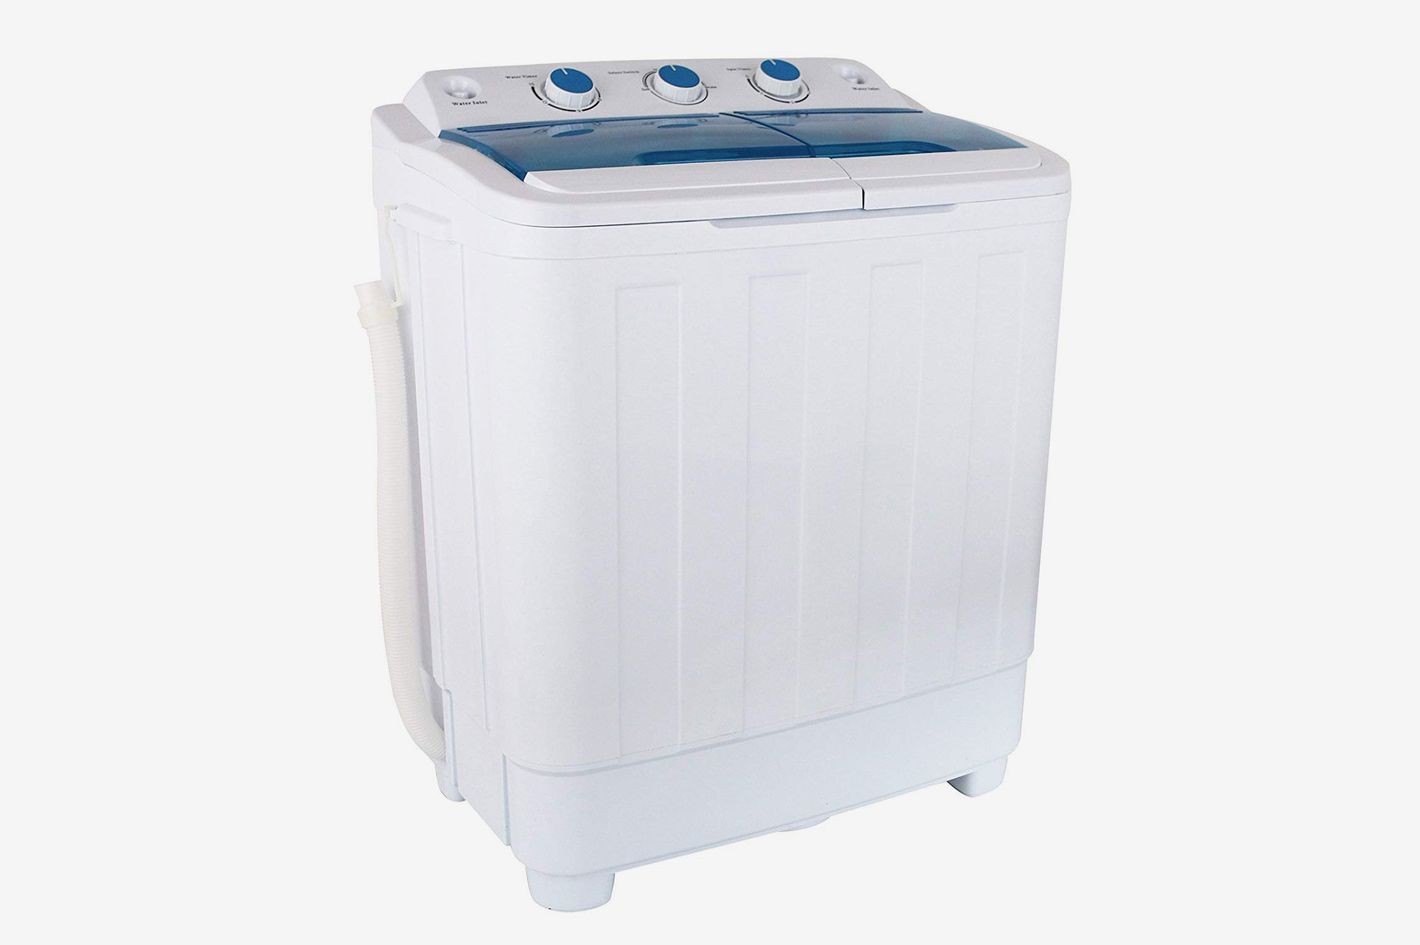 Buy KUPPET Twin Tub Mini Portable Washing Machine, Compact Twin